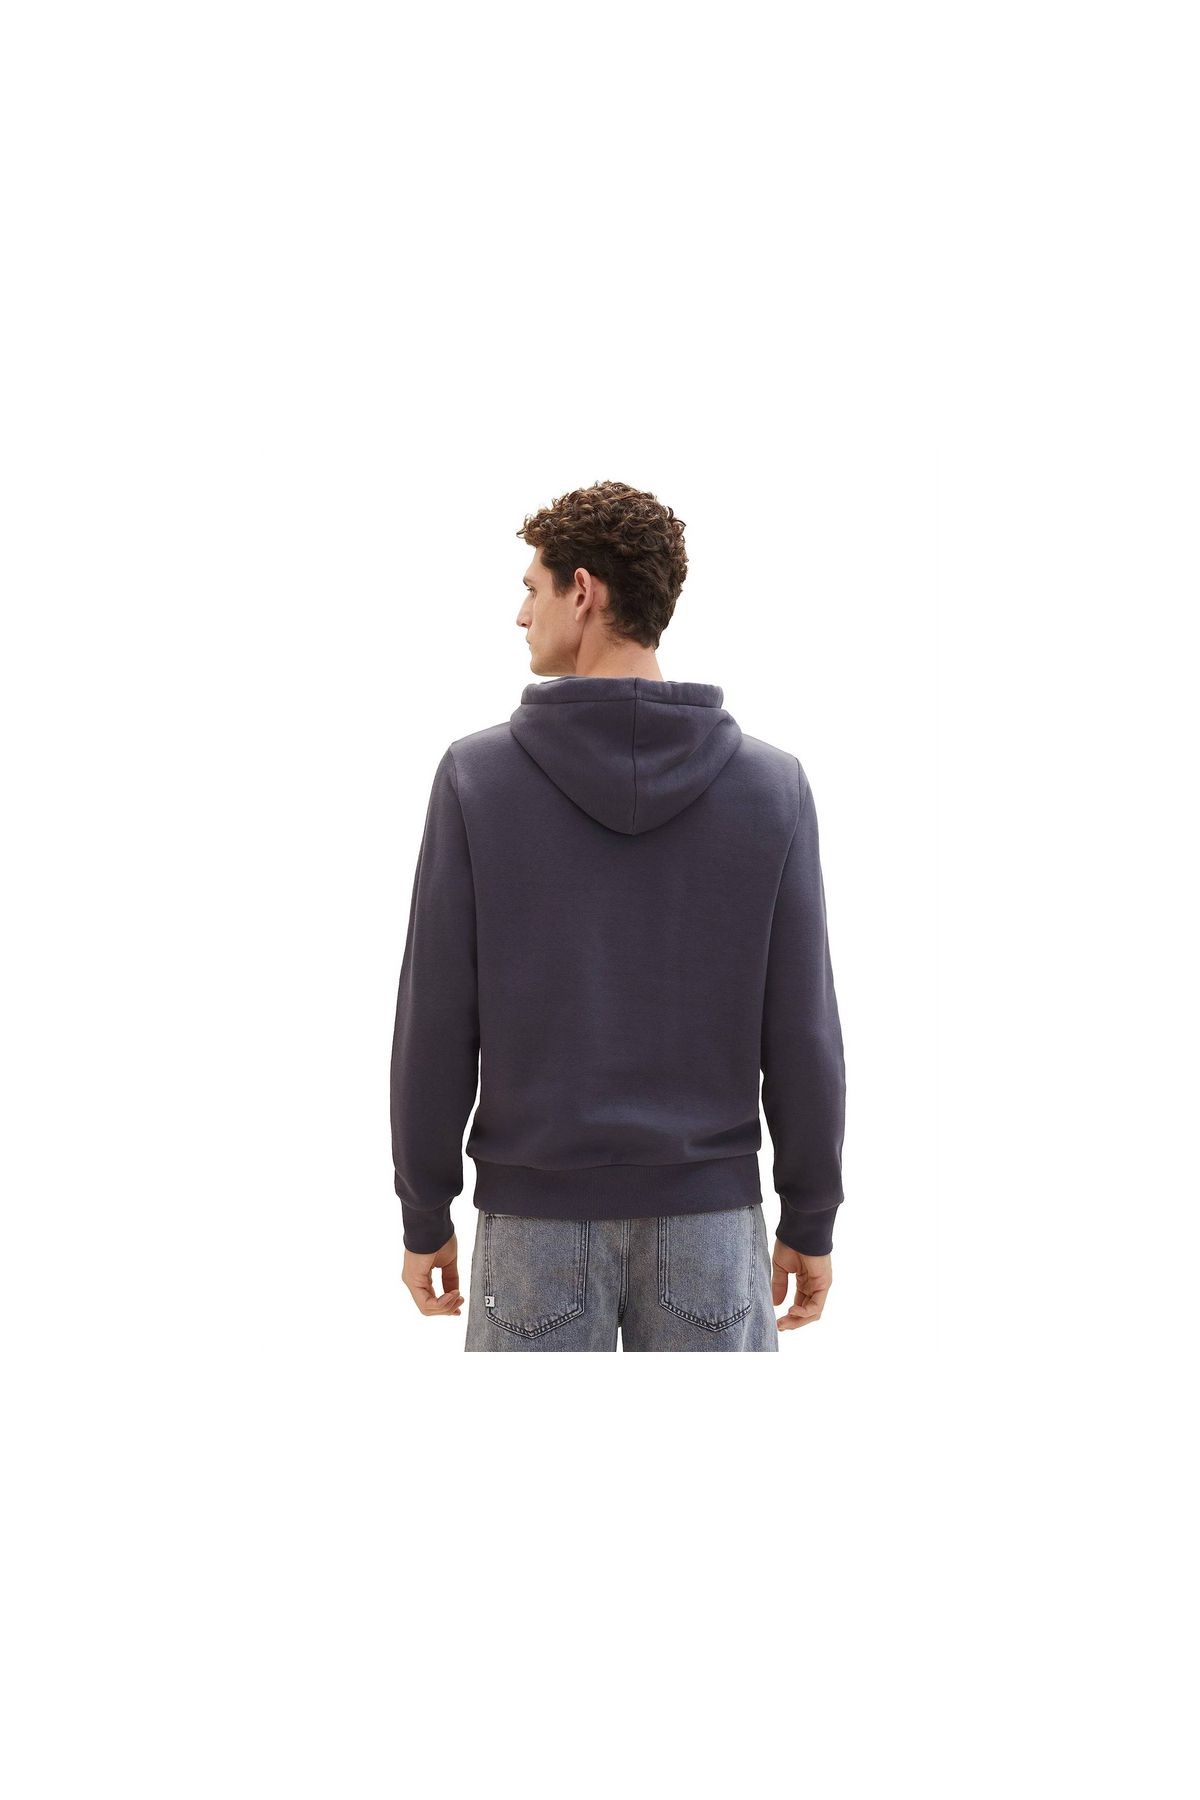 Tom Tailor Sweater - Gray - fit Trendyol - Regular